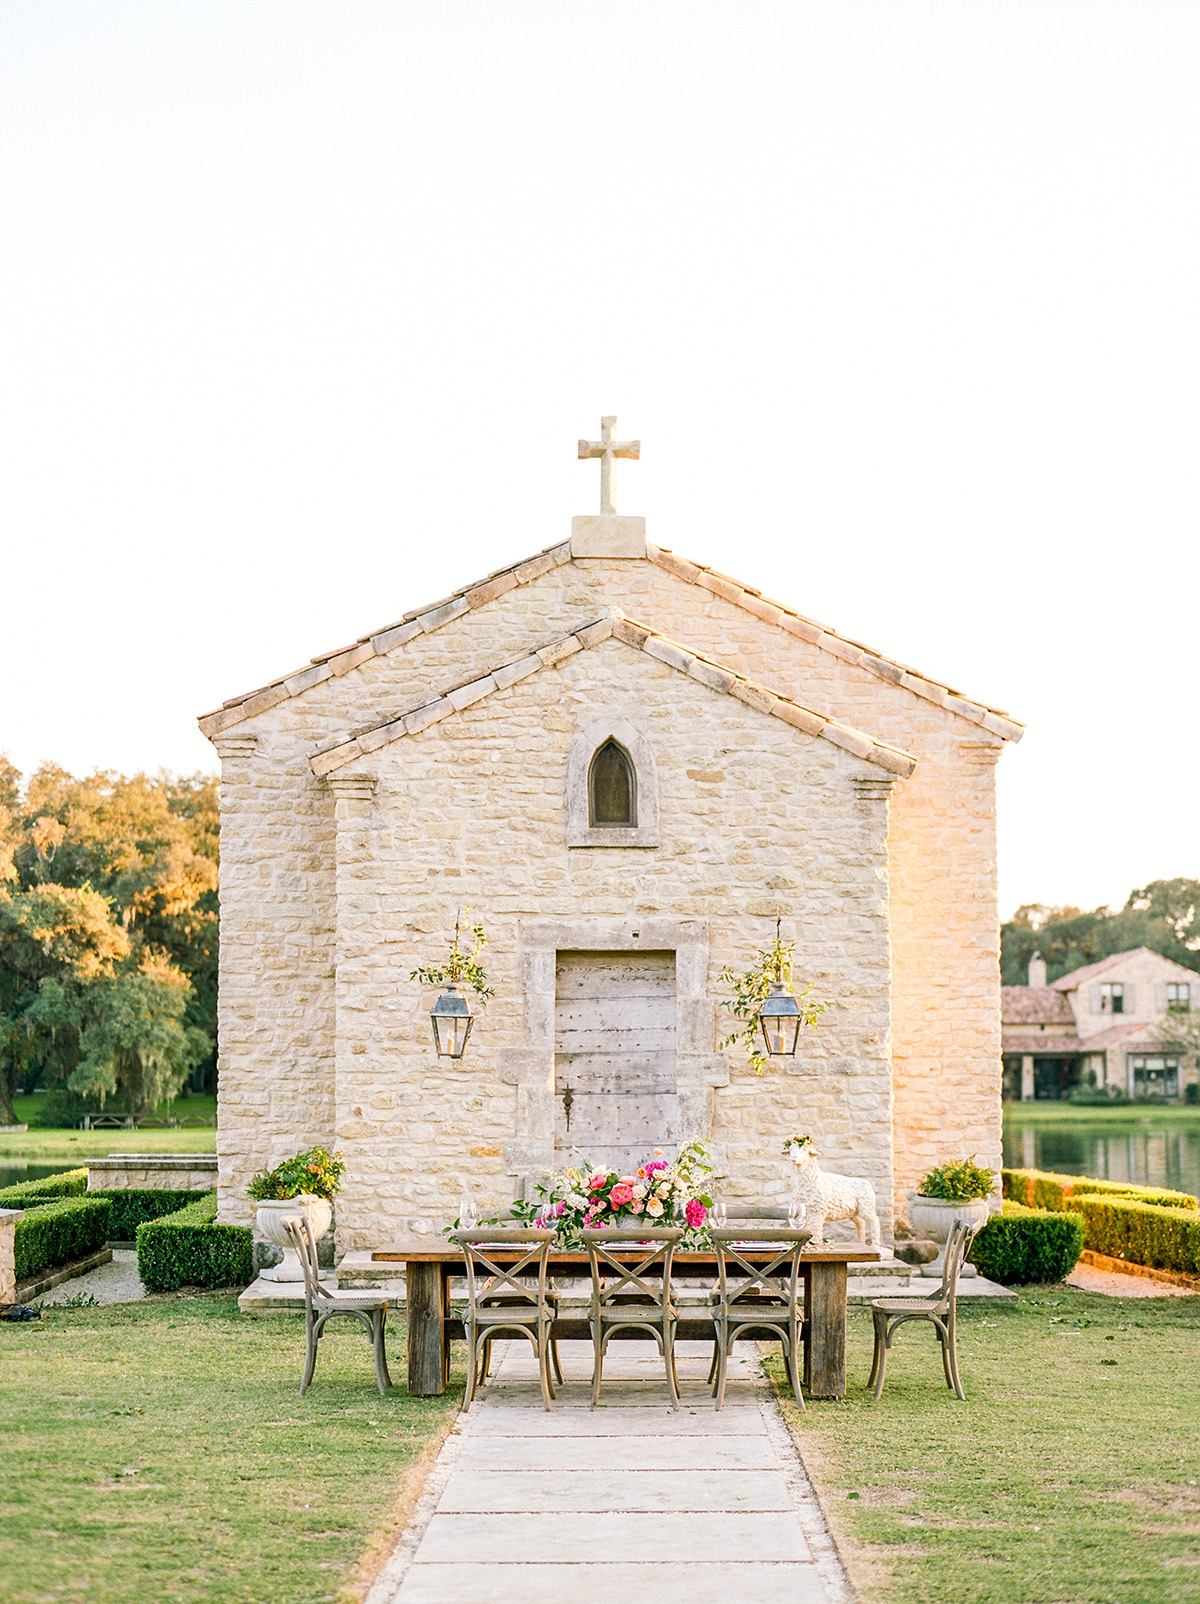 12 stunning wedding chapels across the US